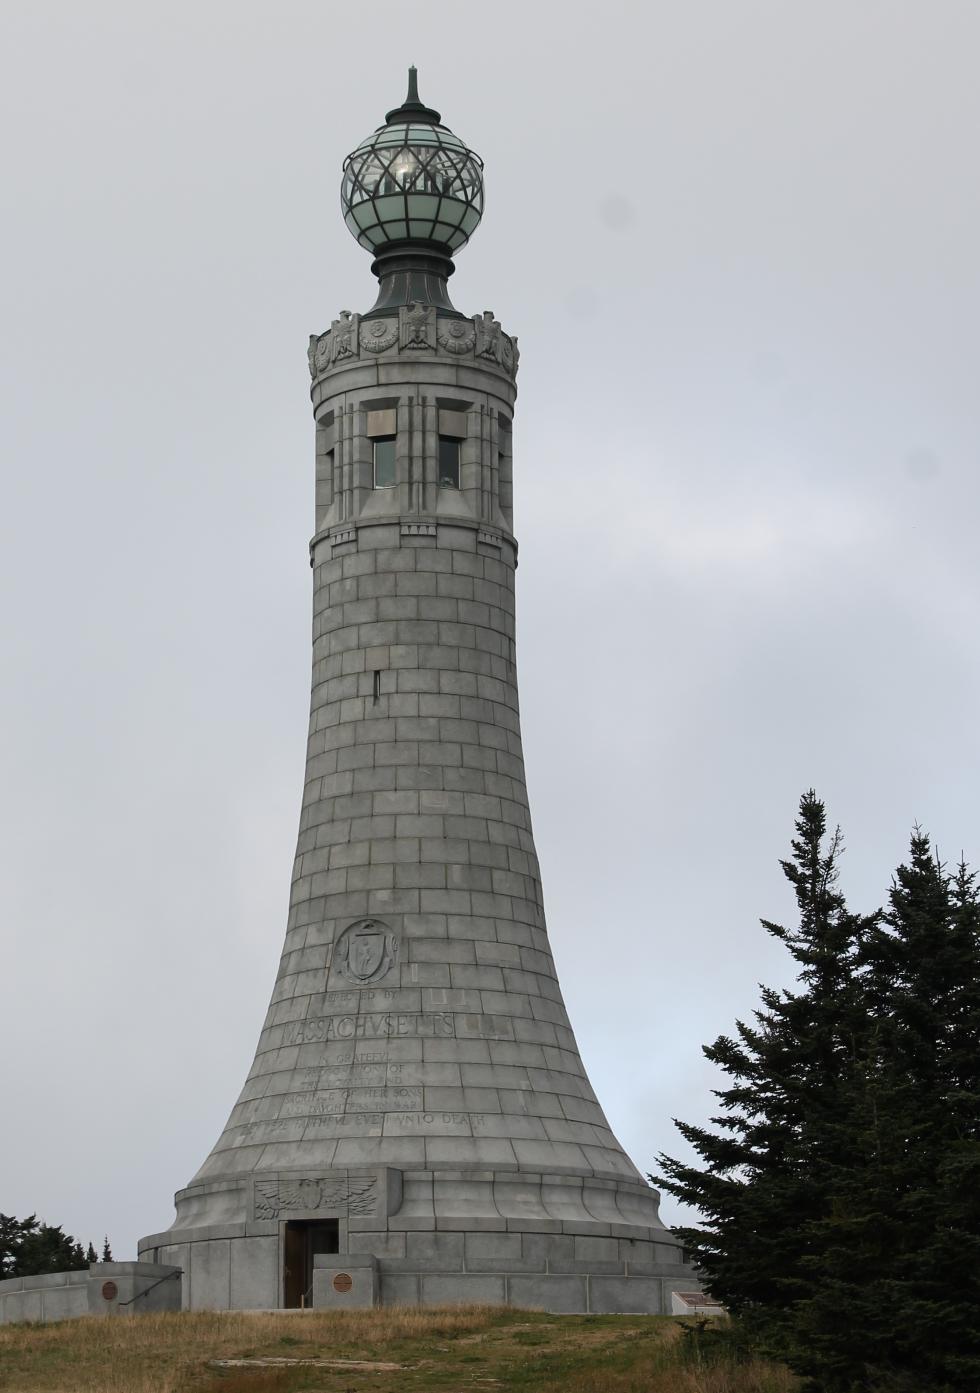 Adams Massachusetts Mt Greylock Veterans Memorial